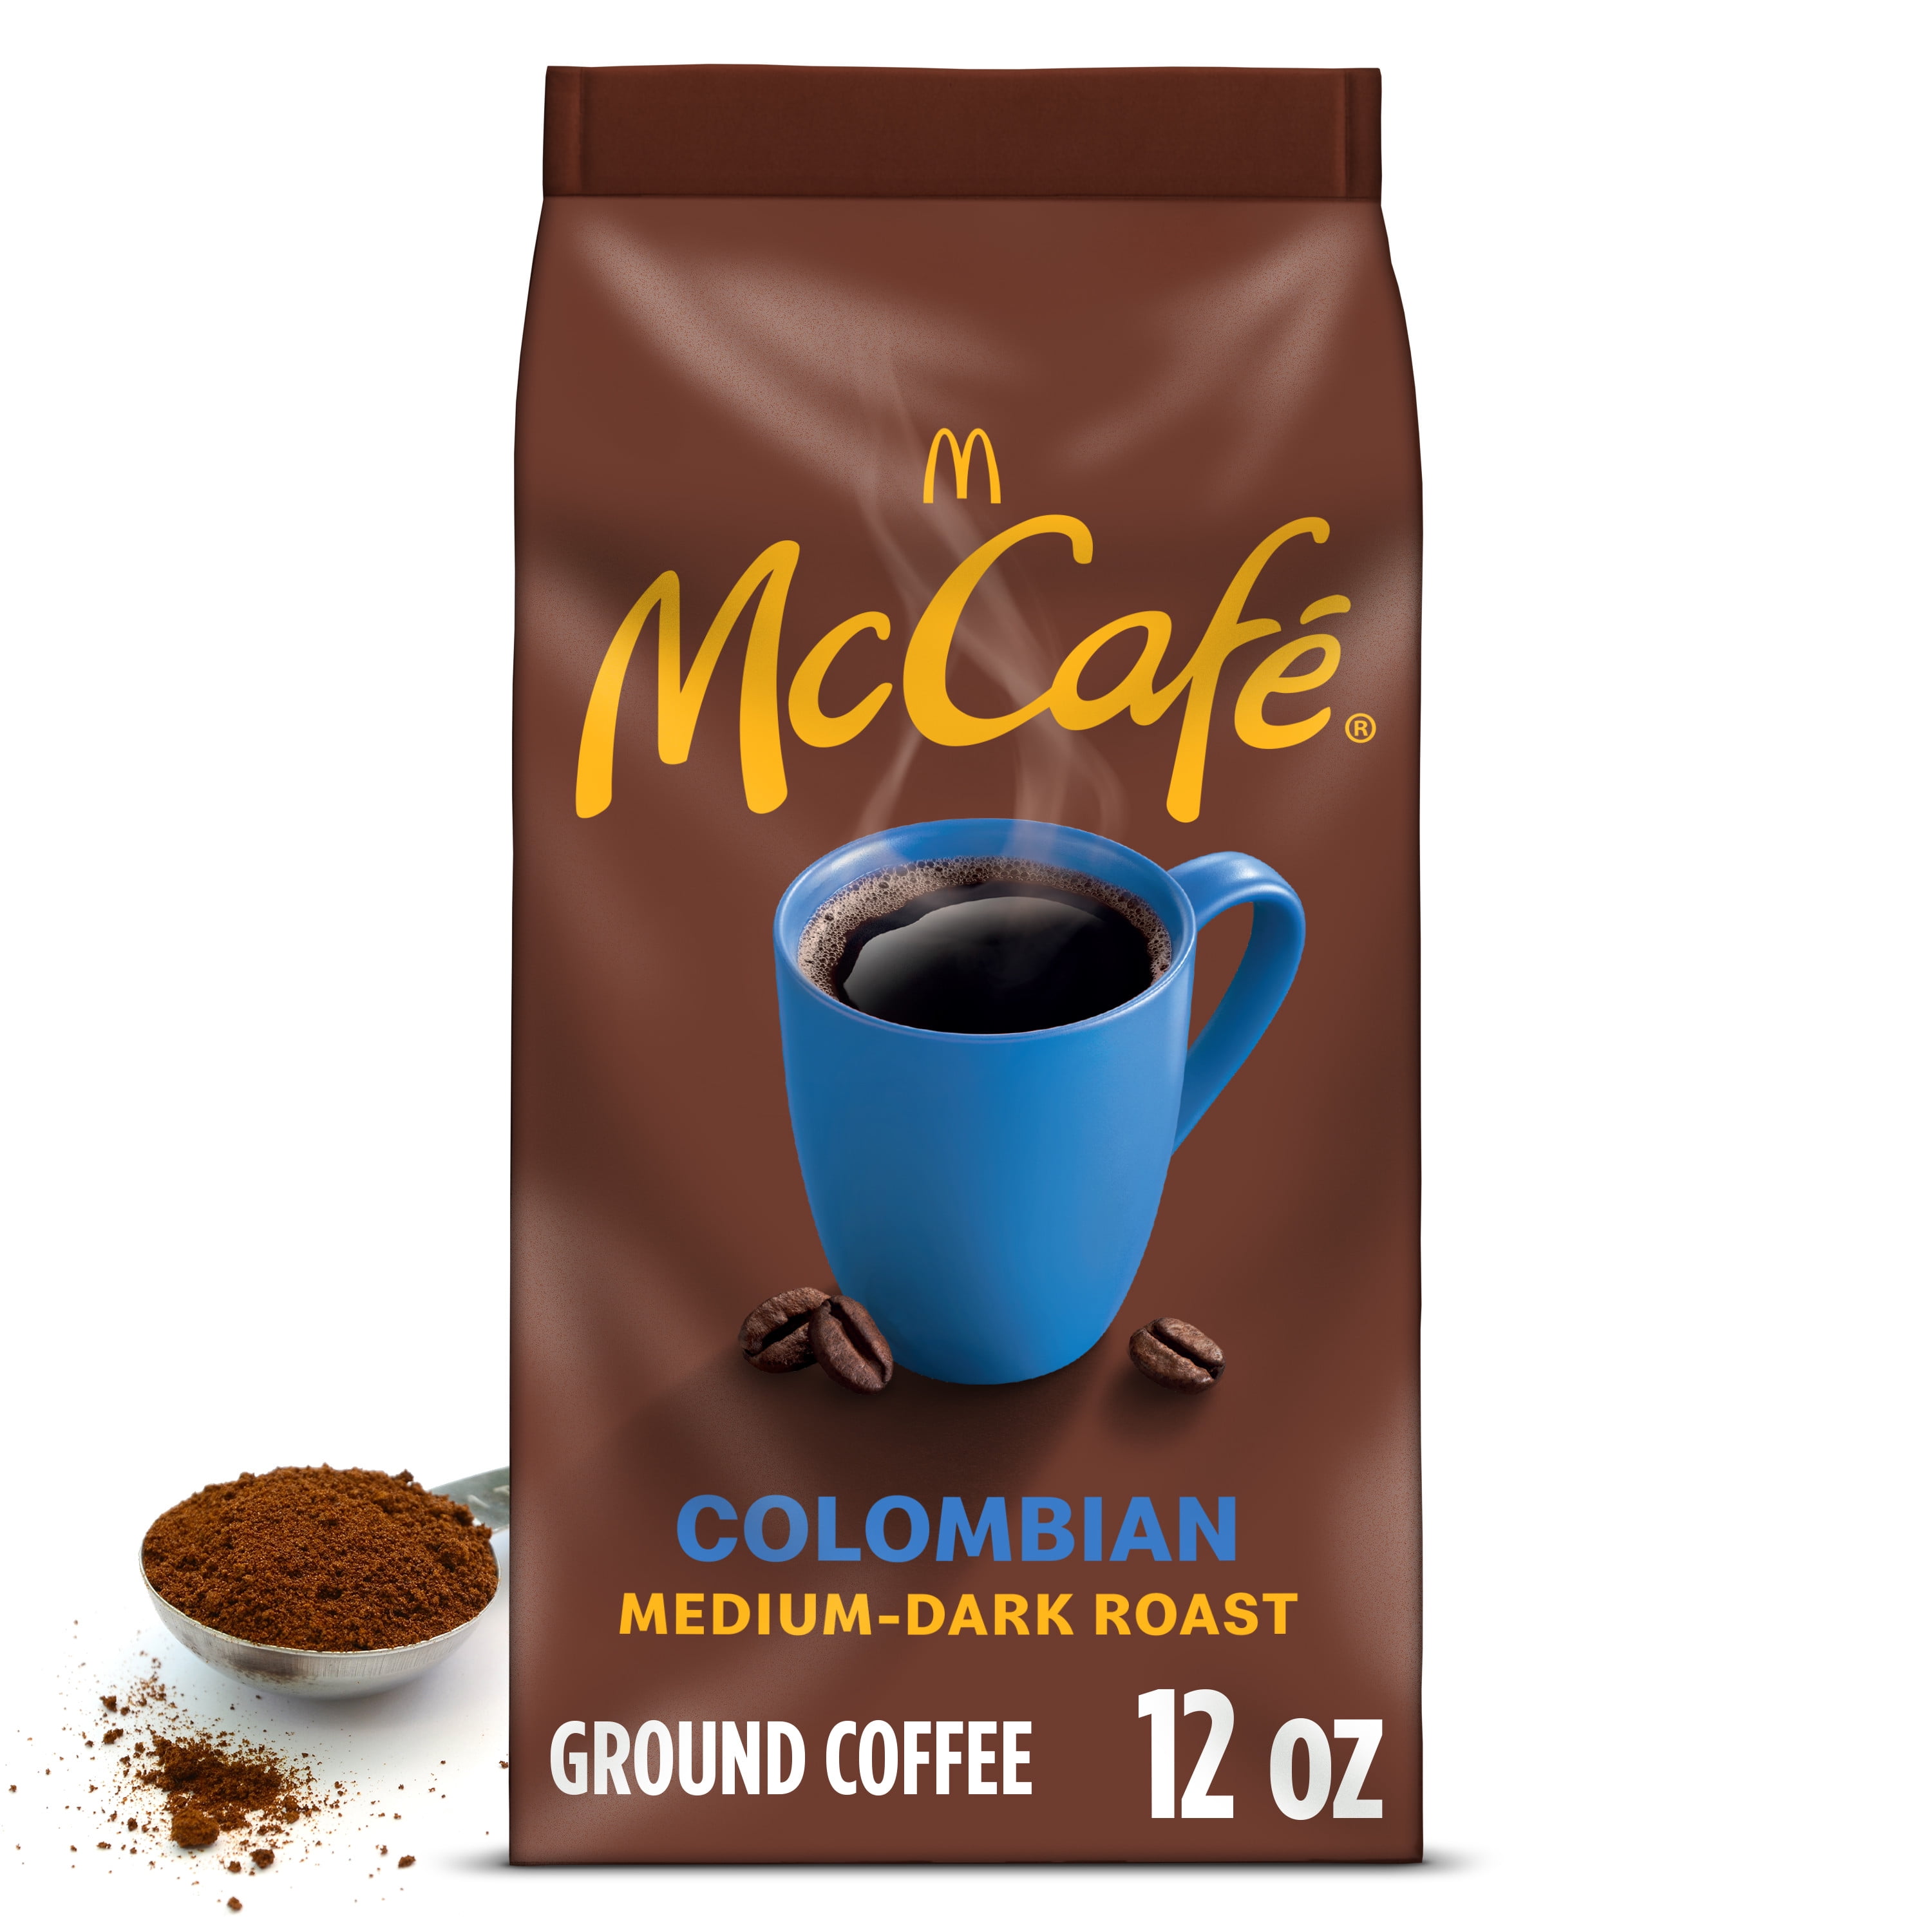 McCafe Colombian, Medium-Dark Ground Coffee, oz - Walmart.com